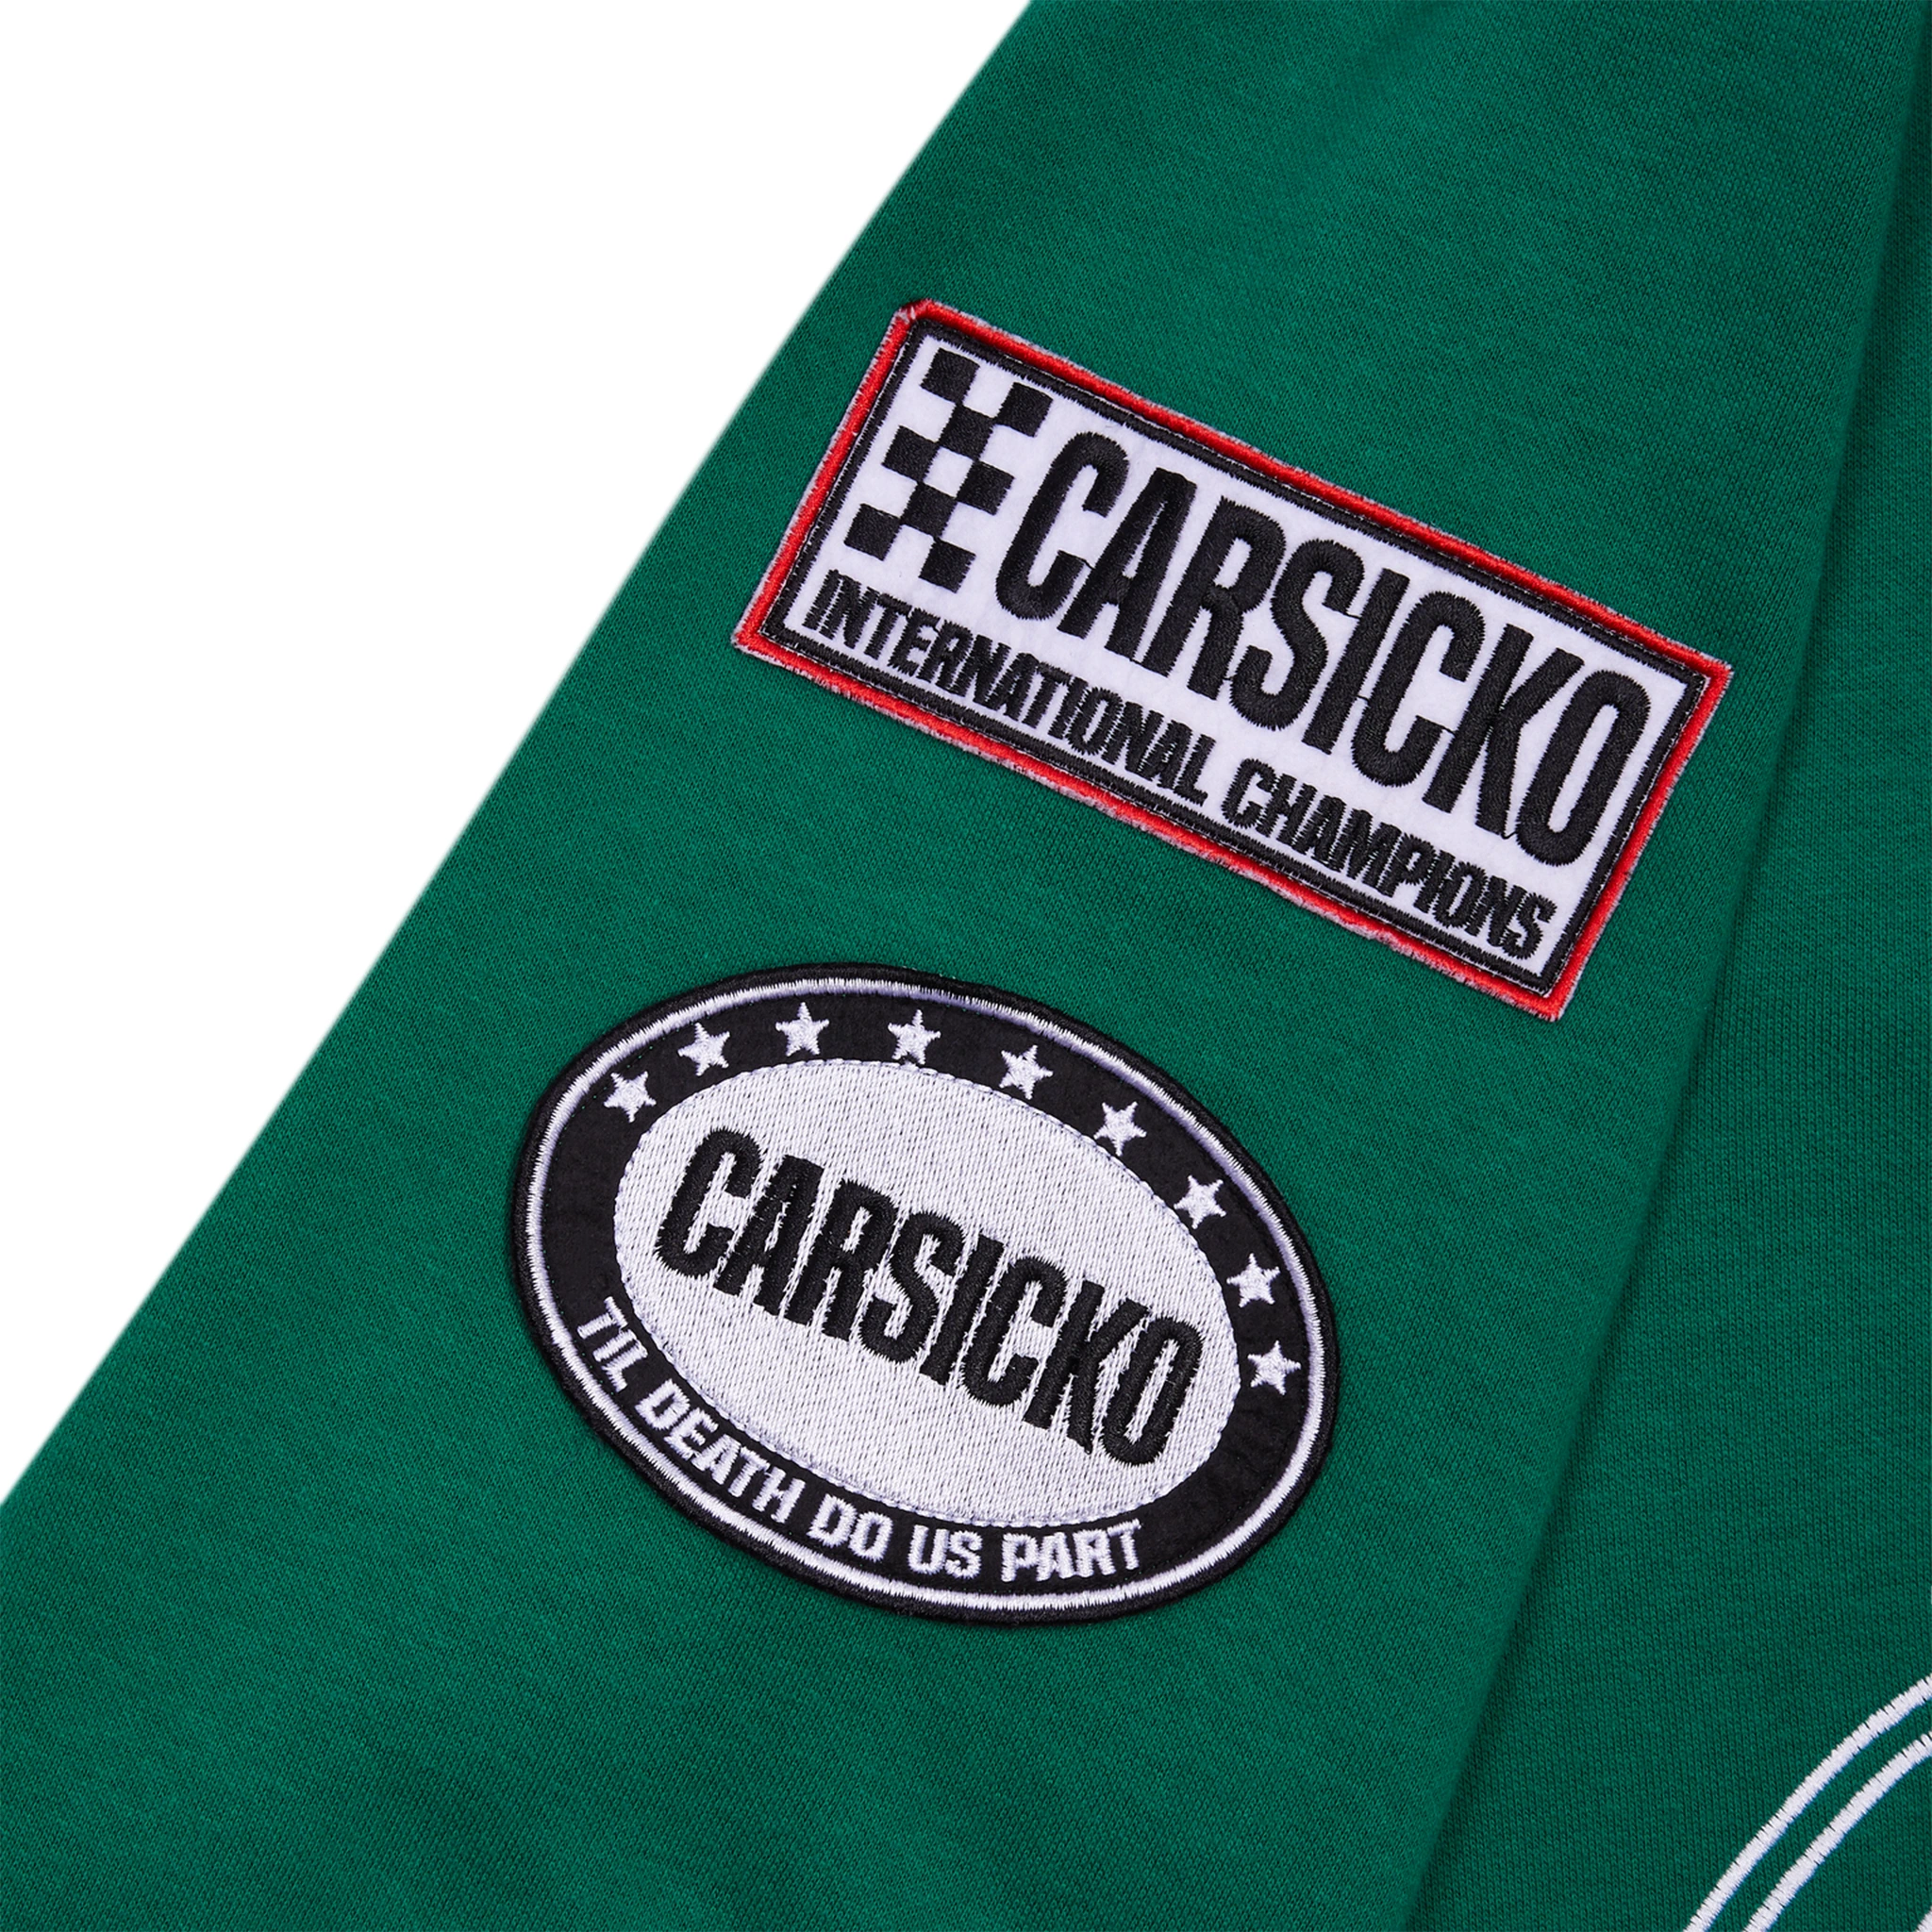 Sleeve view of Carsicko Racing Club Green Hoodie